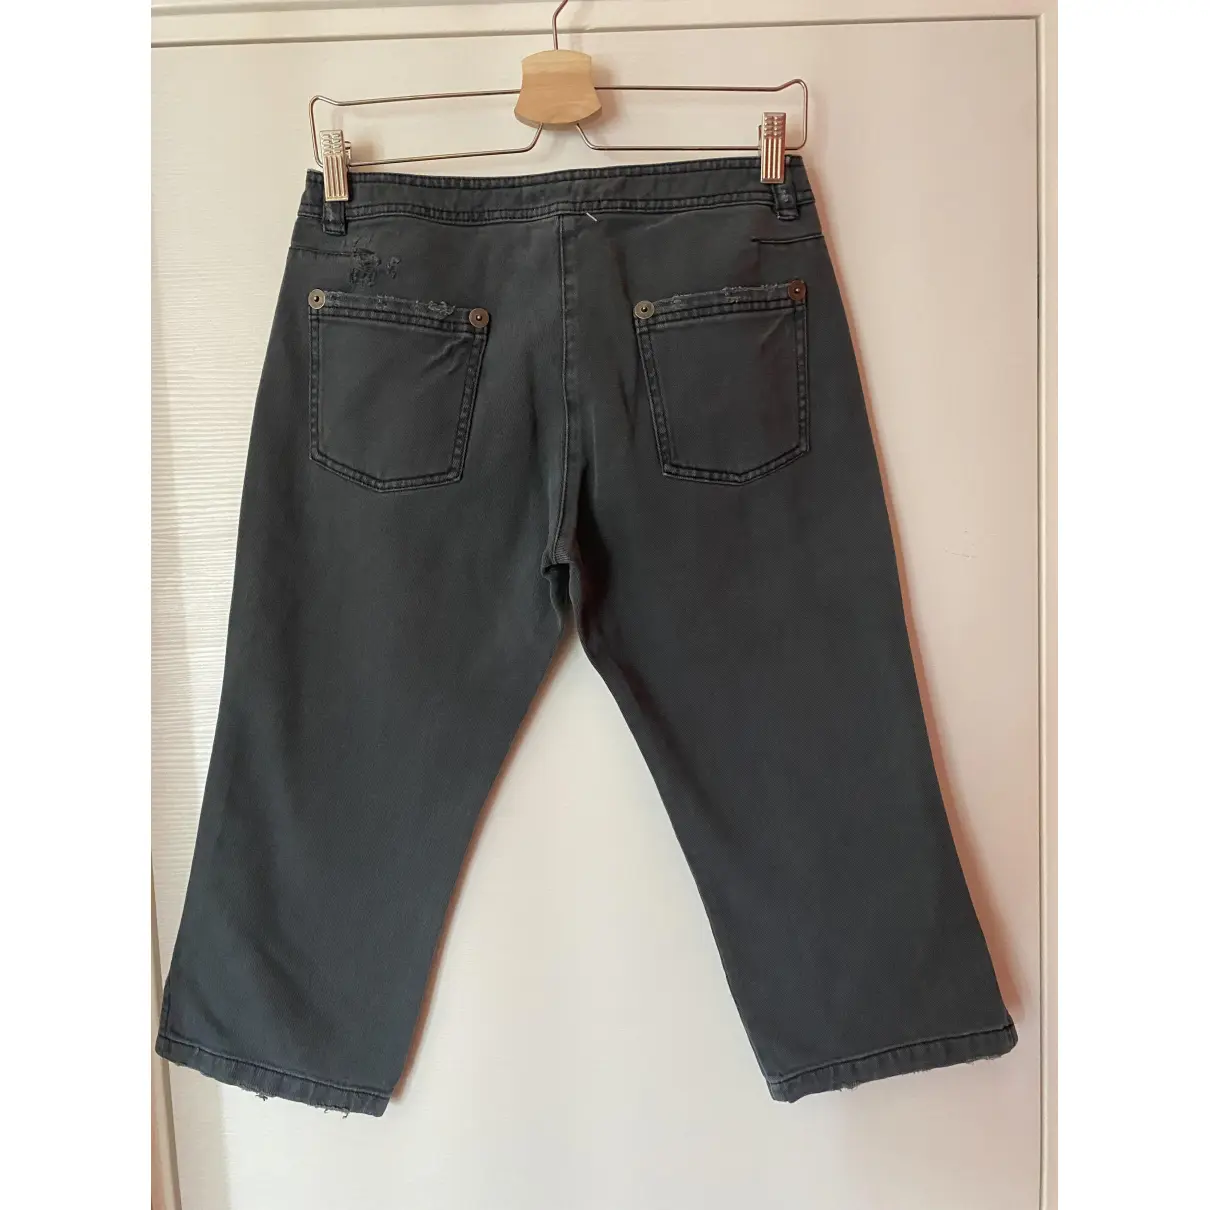 Buy Max & Co Short pants online